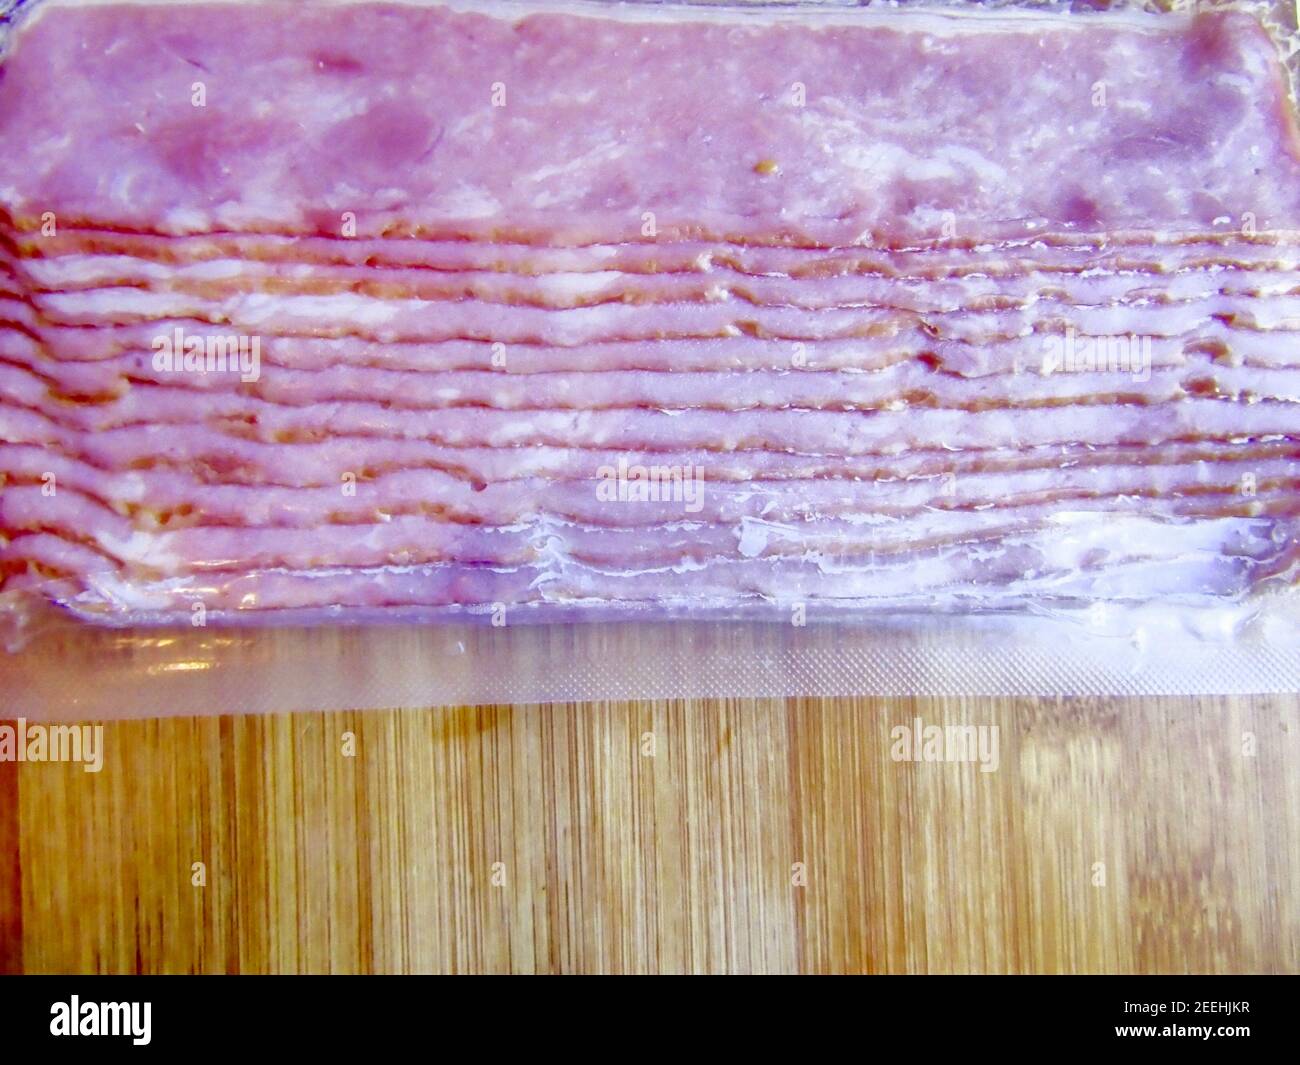 Packet of Smoked Bacon Rashes Stock Photo